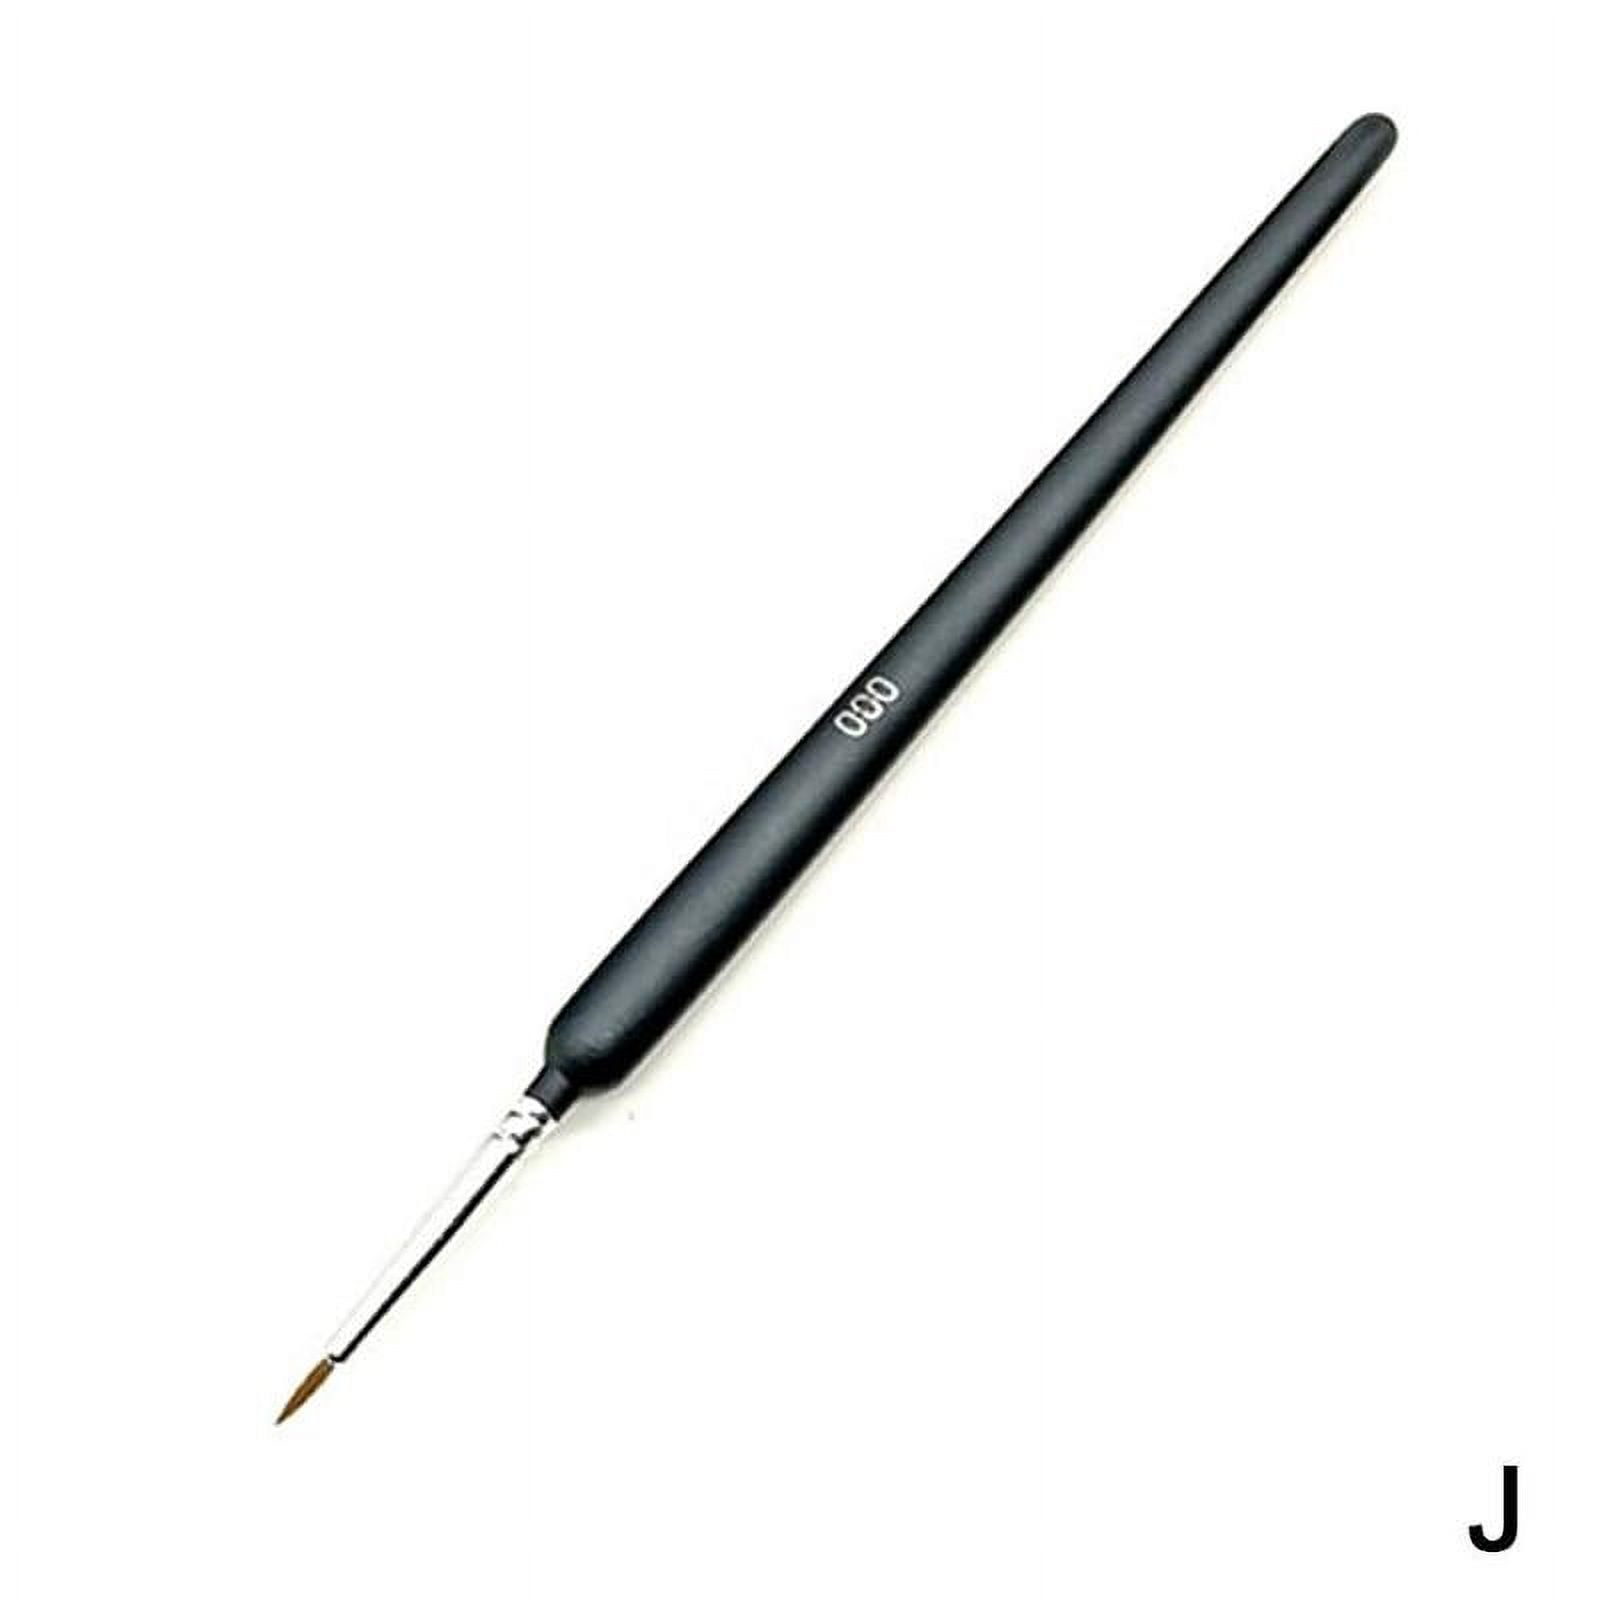 6Pcs/Set,Fine Hand-painted Thin Hook Line Pen Drawing Supplies Paint Brush  Art Pen Nylon paint brushes for artist paintbrushes - AliExpress